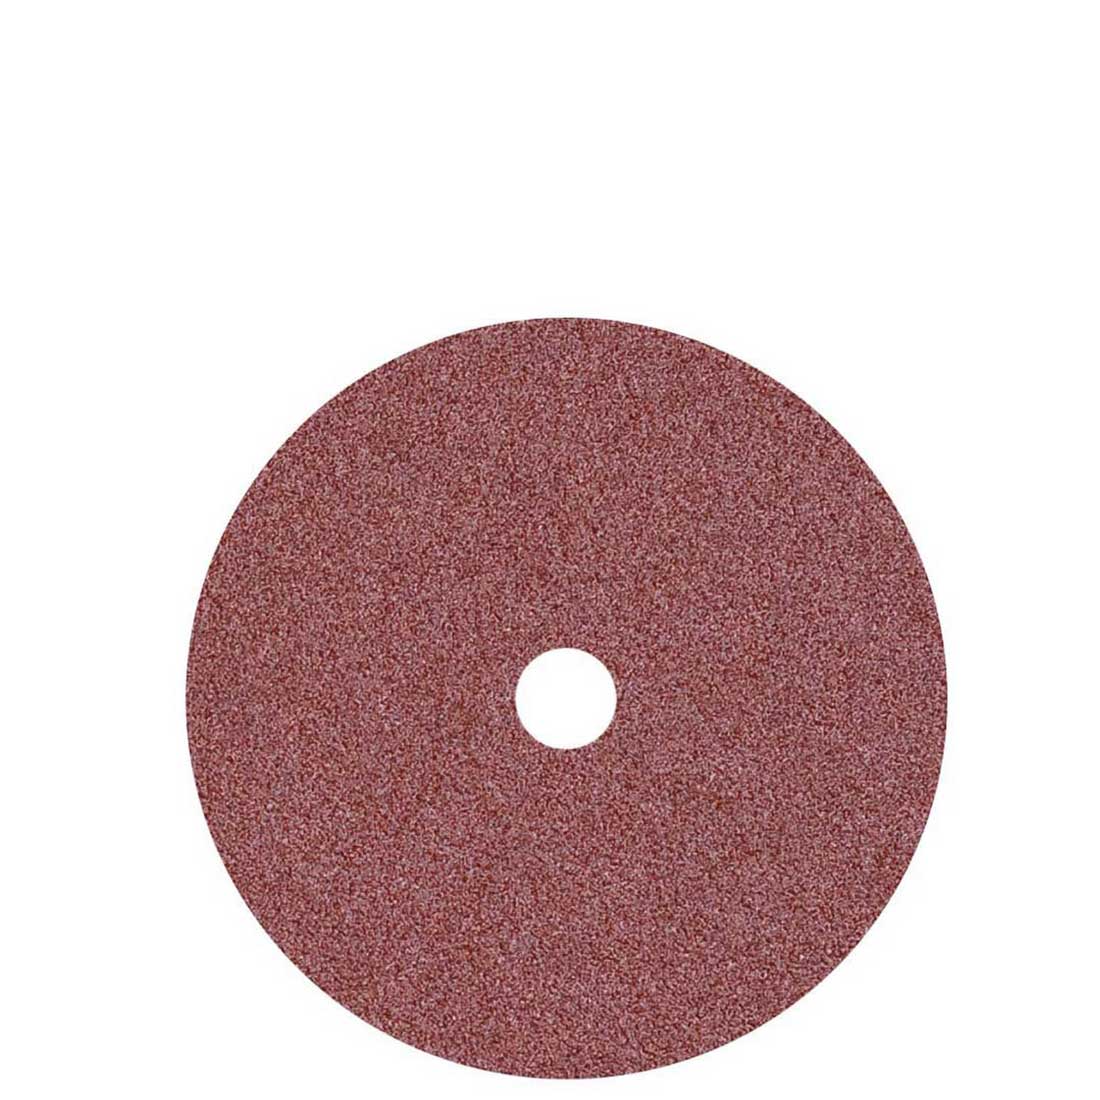 MioTools sanding discs for orbital floor sanders, G16–120, Ø 375 mm / doublesided / aluminium oxide